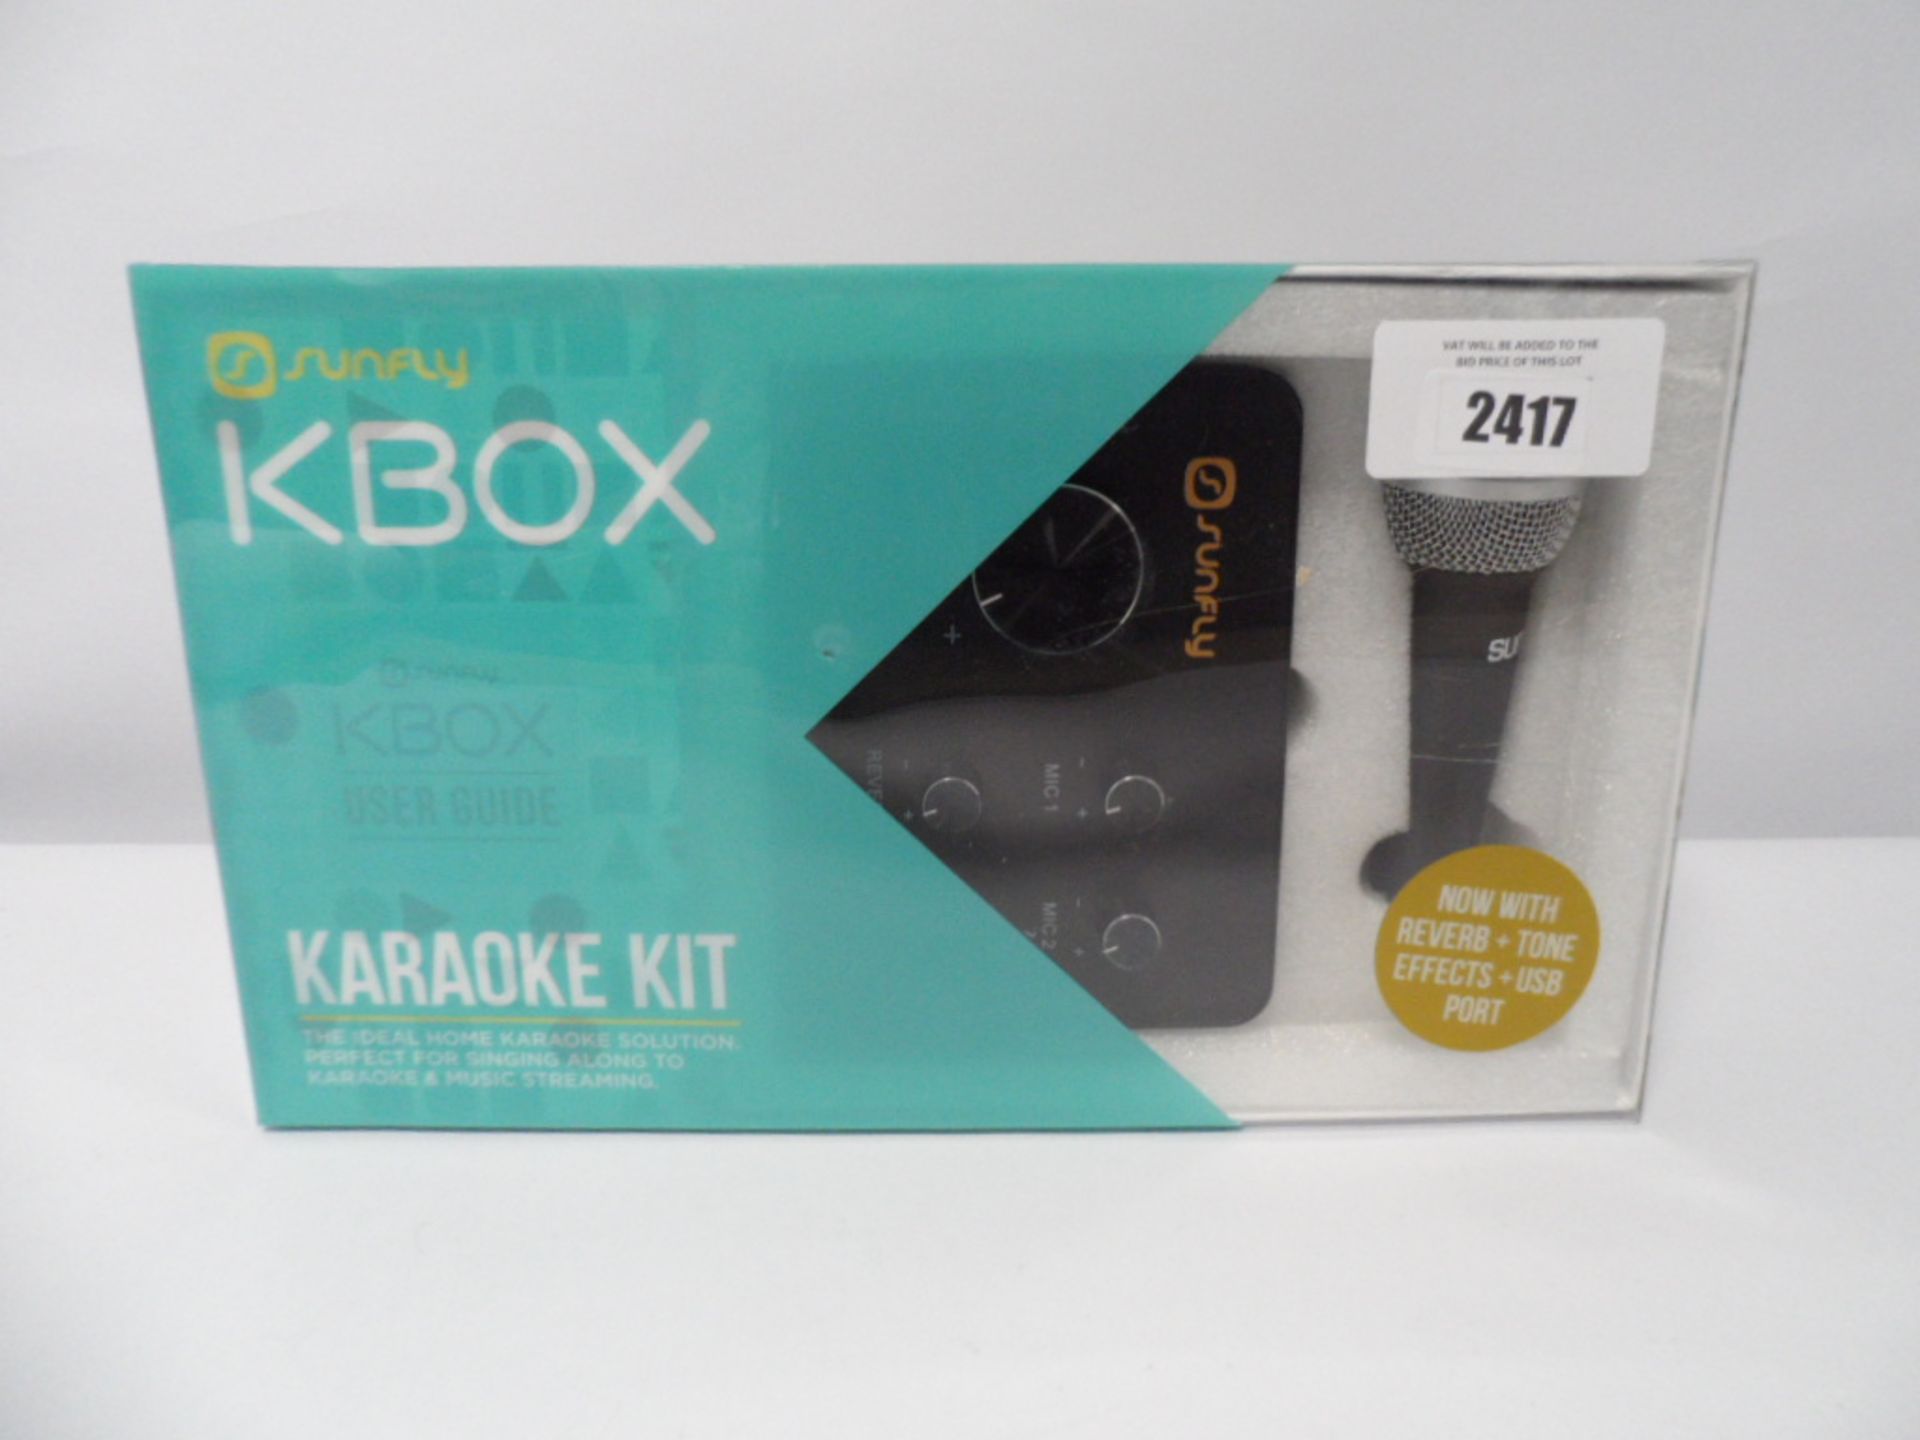 Sunfly Kbox karaoke kit boxed.